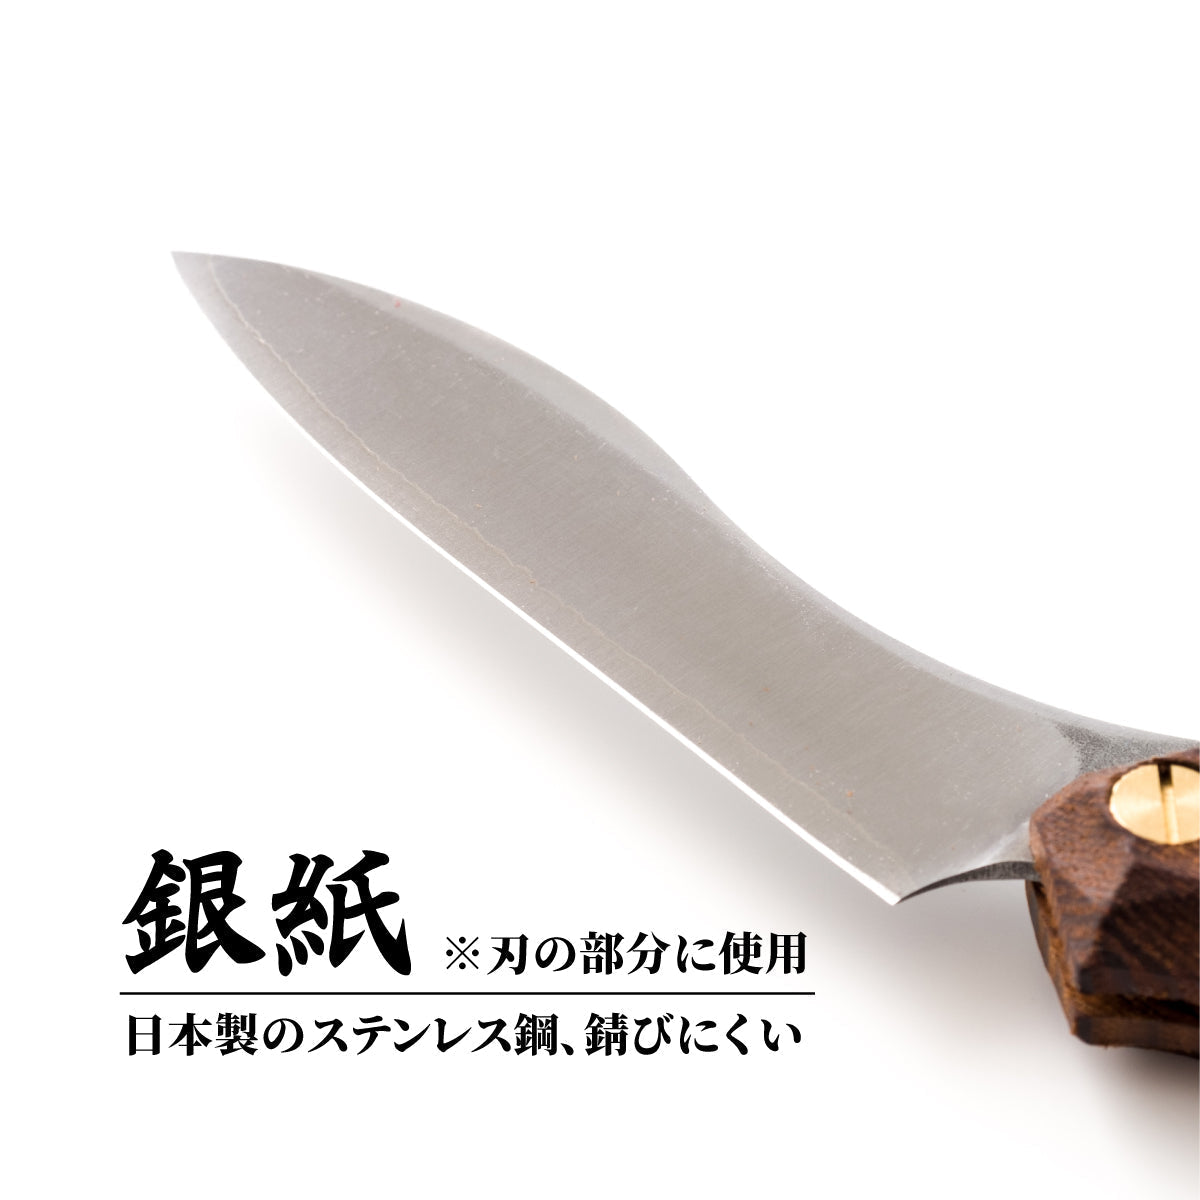 【NEW】折畳式料理ナイフ 名栗オノオレカンバ  (ステンレス鋼/銀紙三号) 12,100円